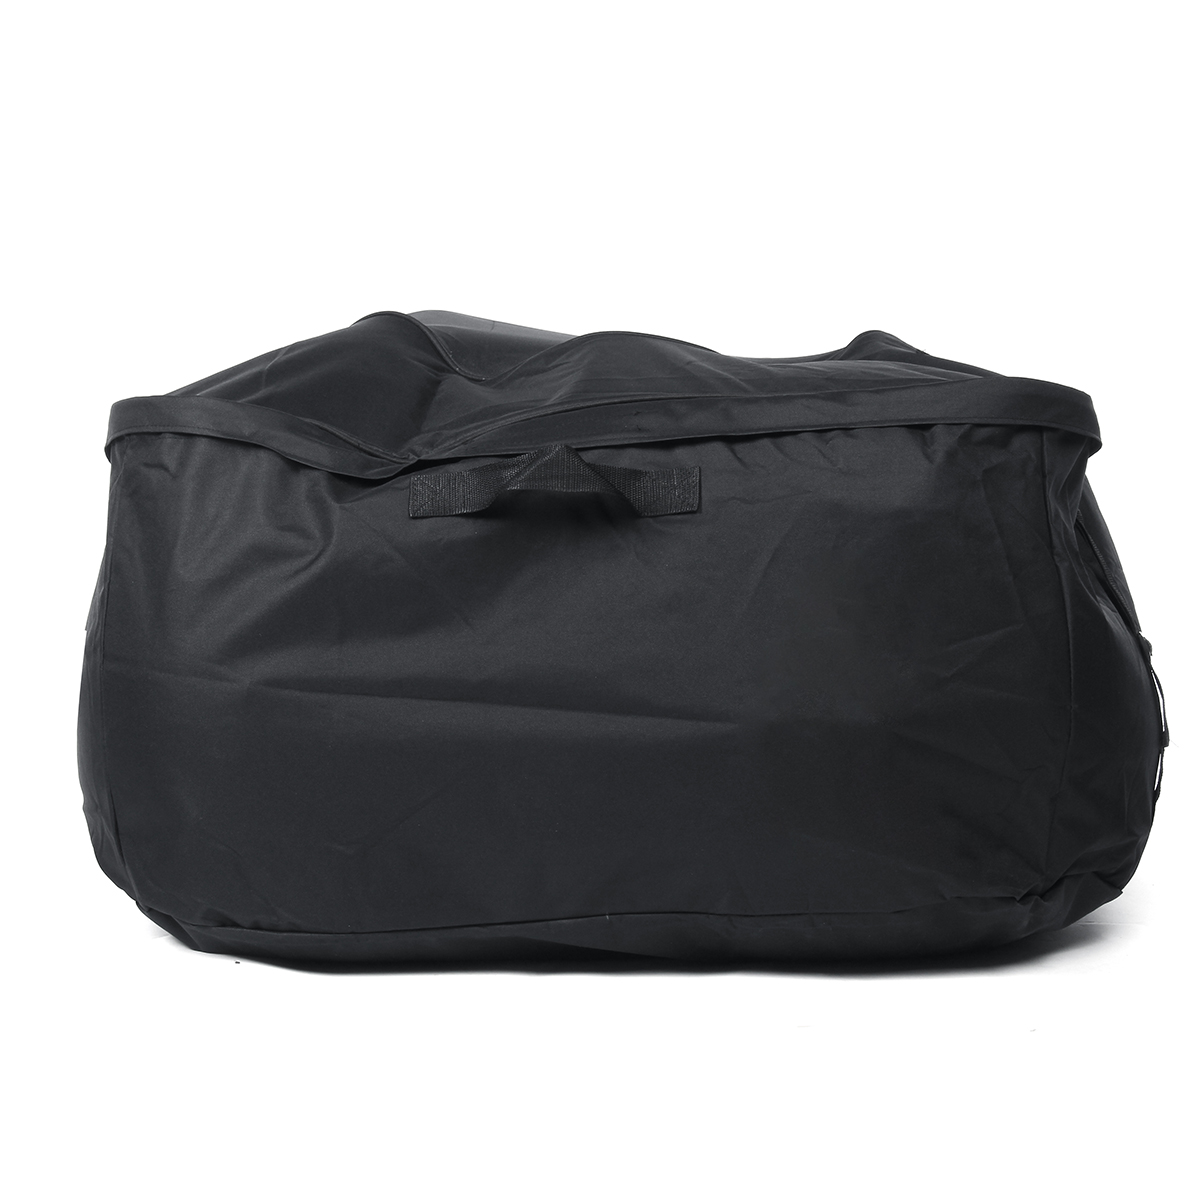 Portable-Travel-Storage-Bag-Waterproof-Car-SUV-Roof-Top-Rack-Bag-600D-Oxford-Travel-Luggage-Storage--1812090-9